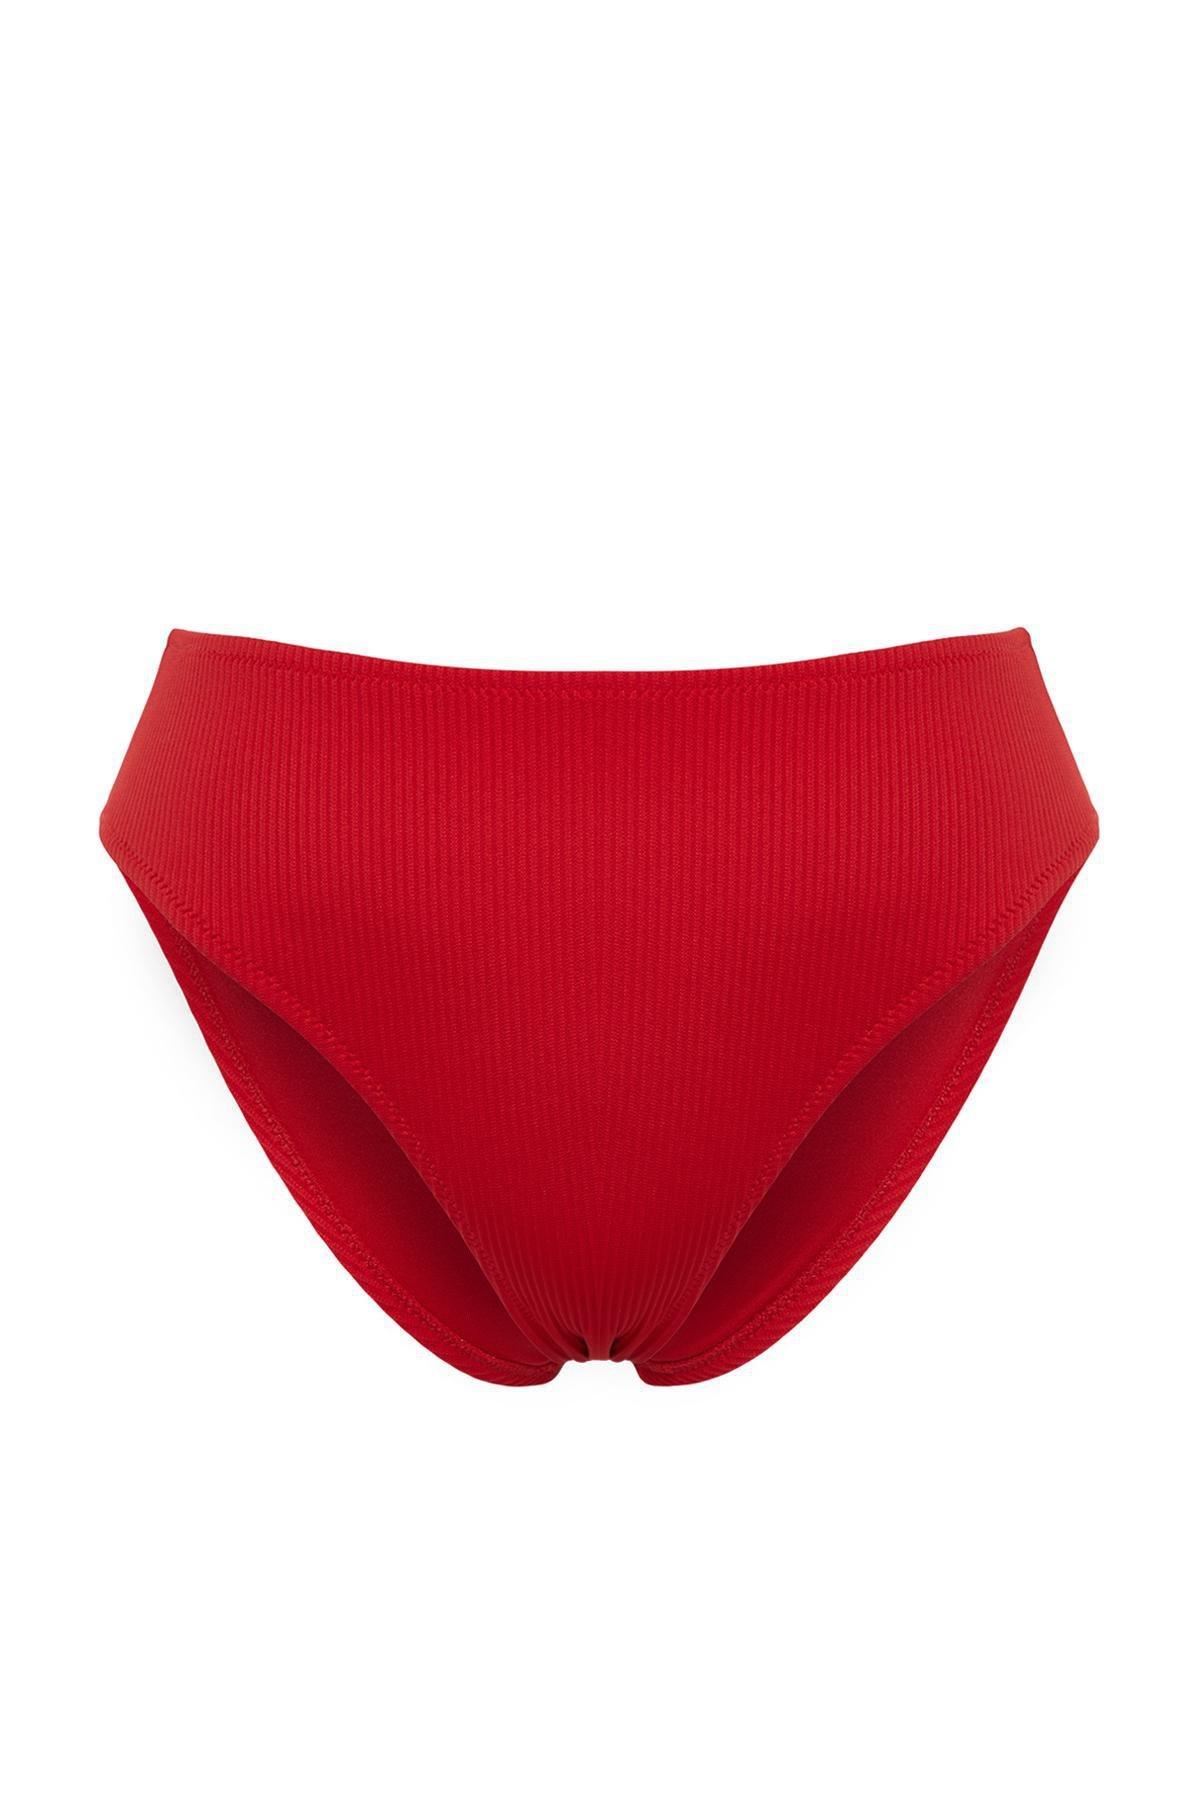 Trendyol - Red Textured High Waist Bikini Bottom